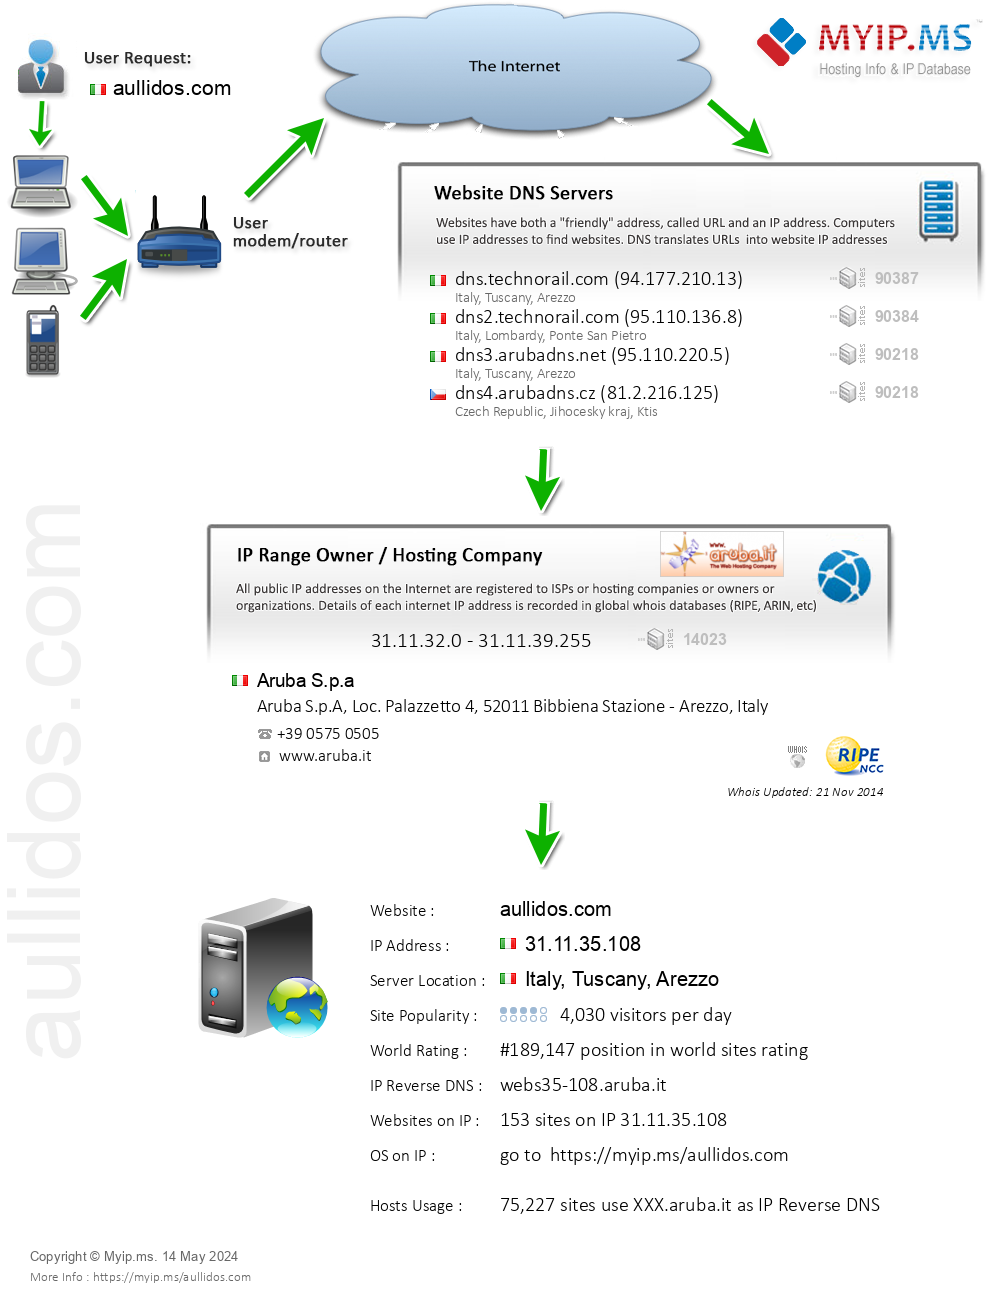 Aullidos.com - Website Hosting Visual IP Diagram